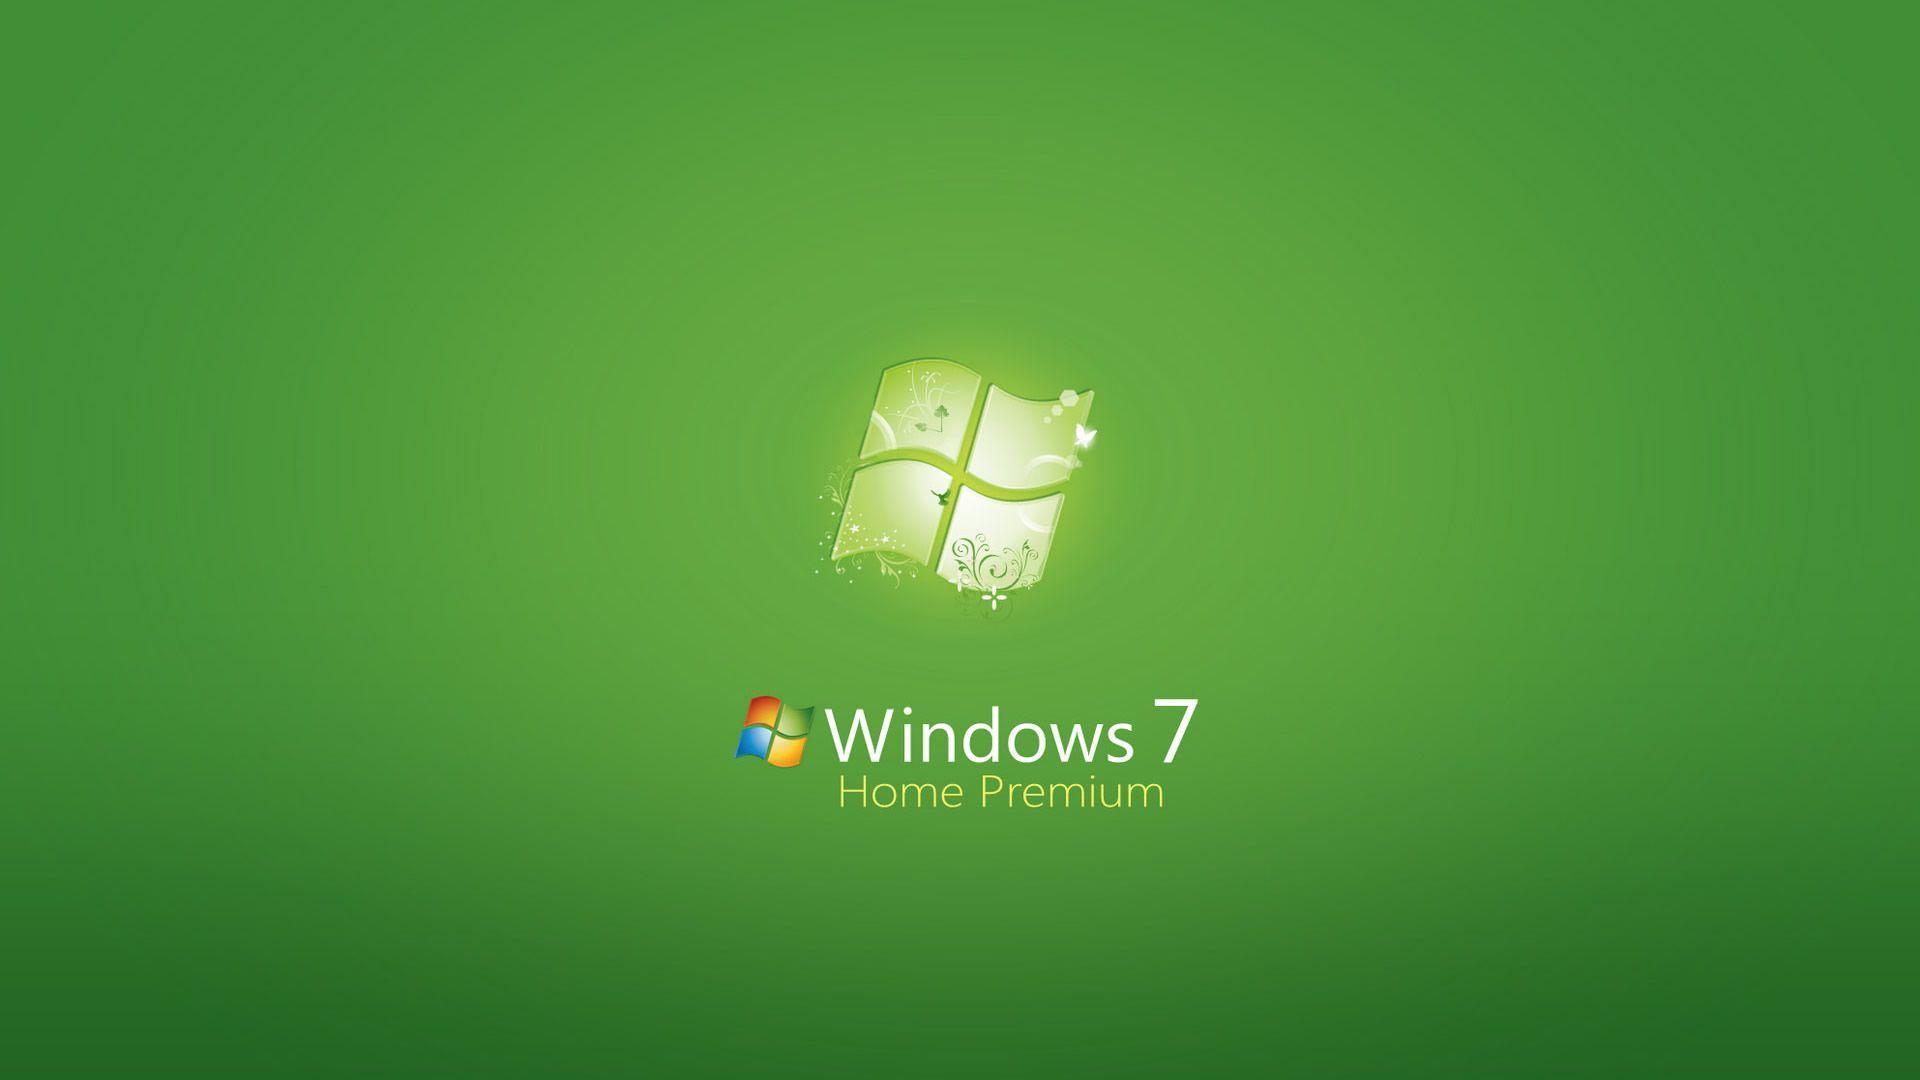 Windows 7 Background. Wallpaper For Desktop and Mobile